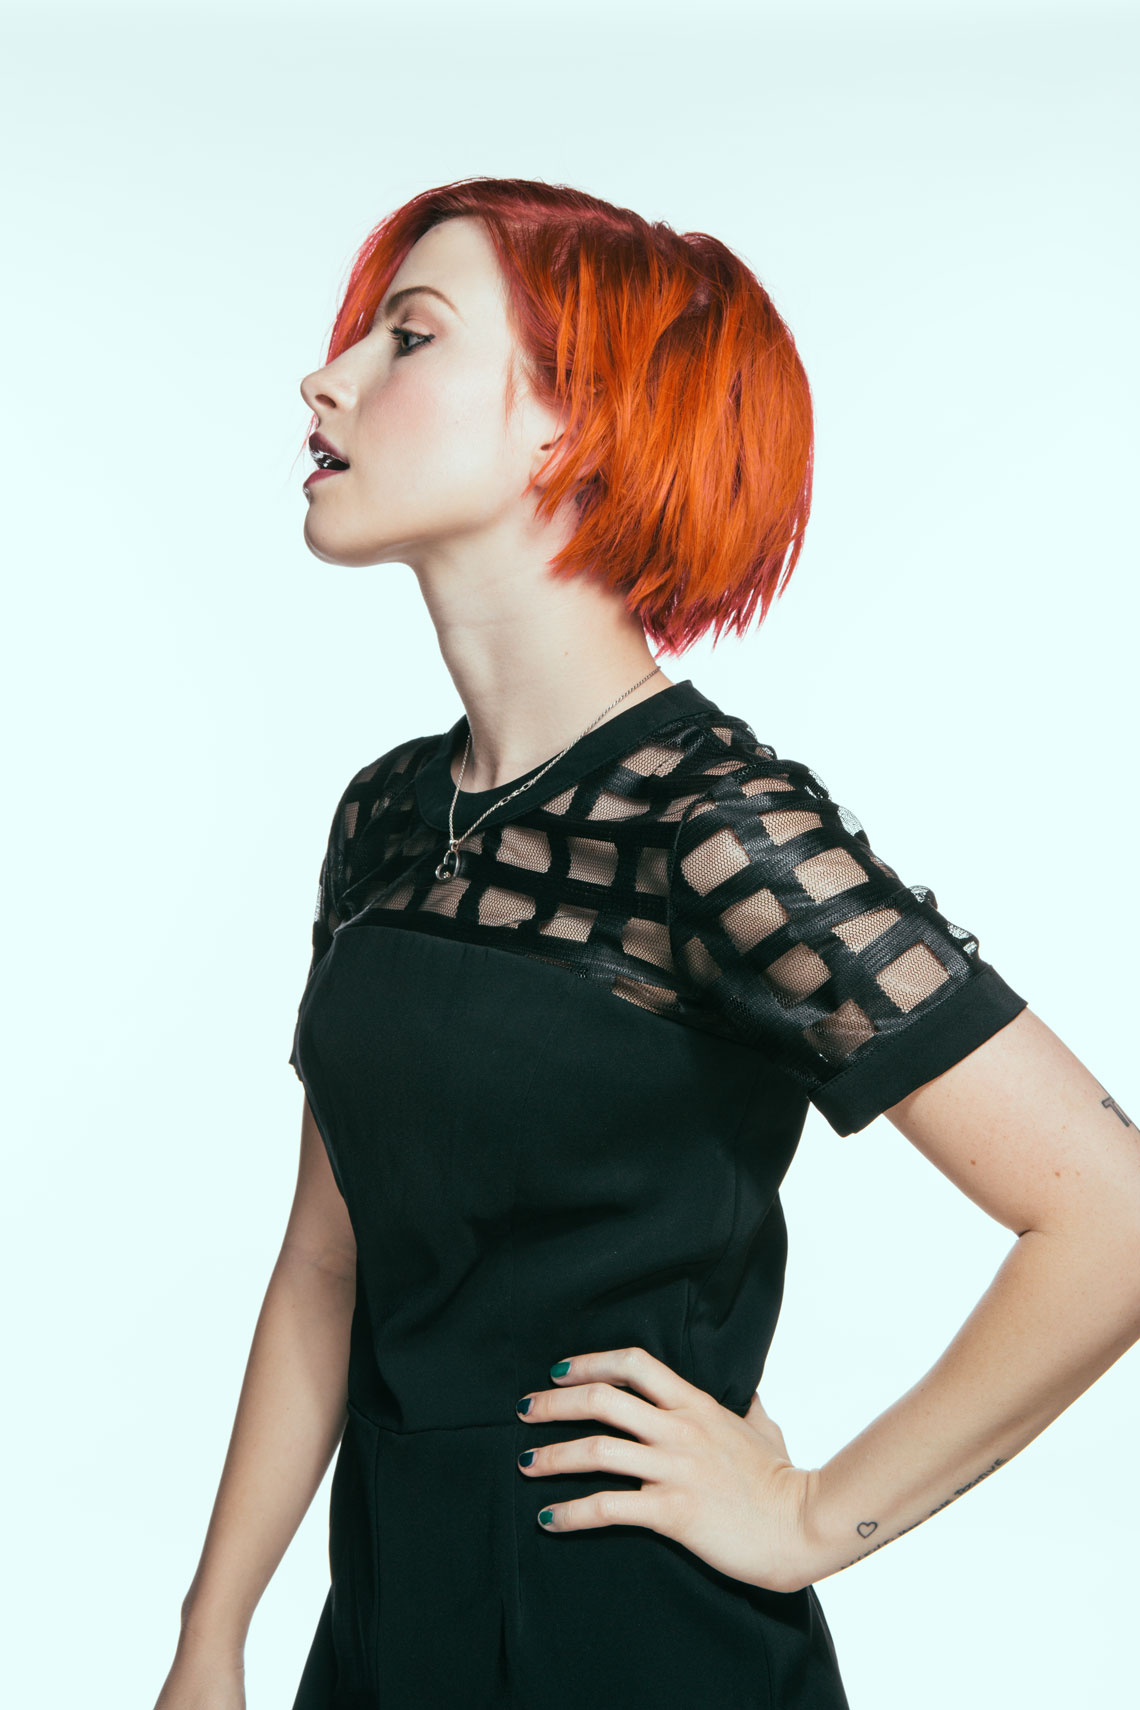 People 1140x1710 Hayley Williams singer redhead short hair women portrait display simple background studio